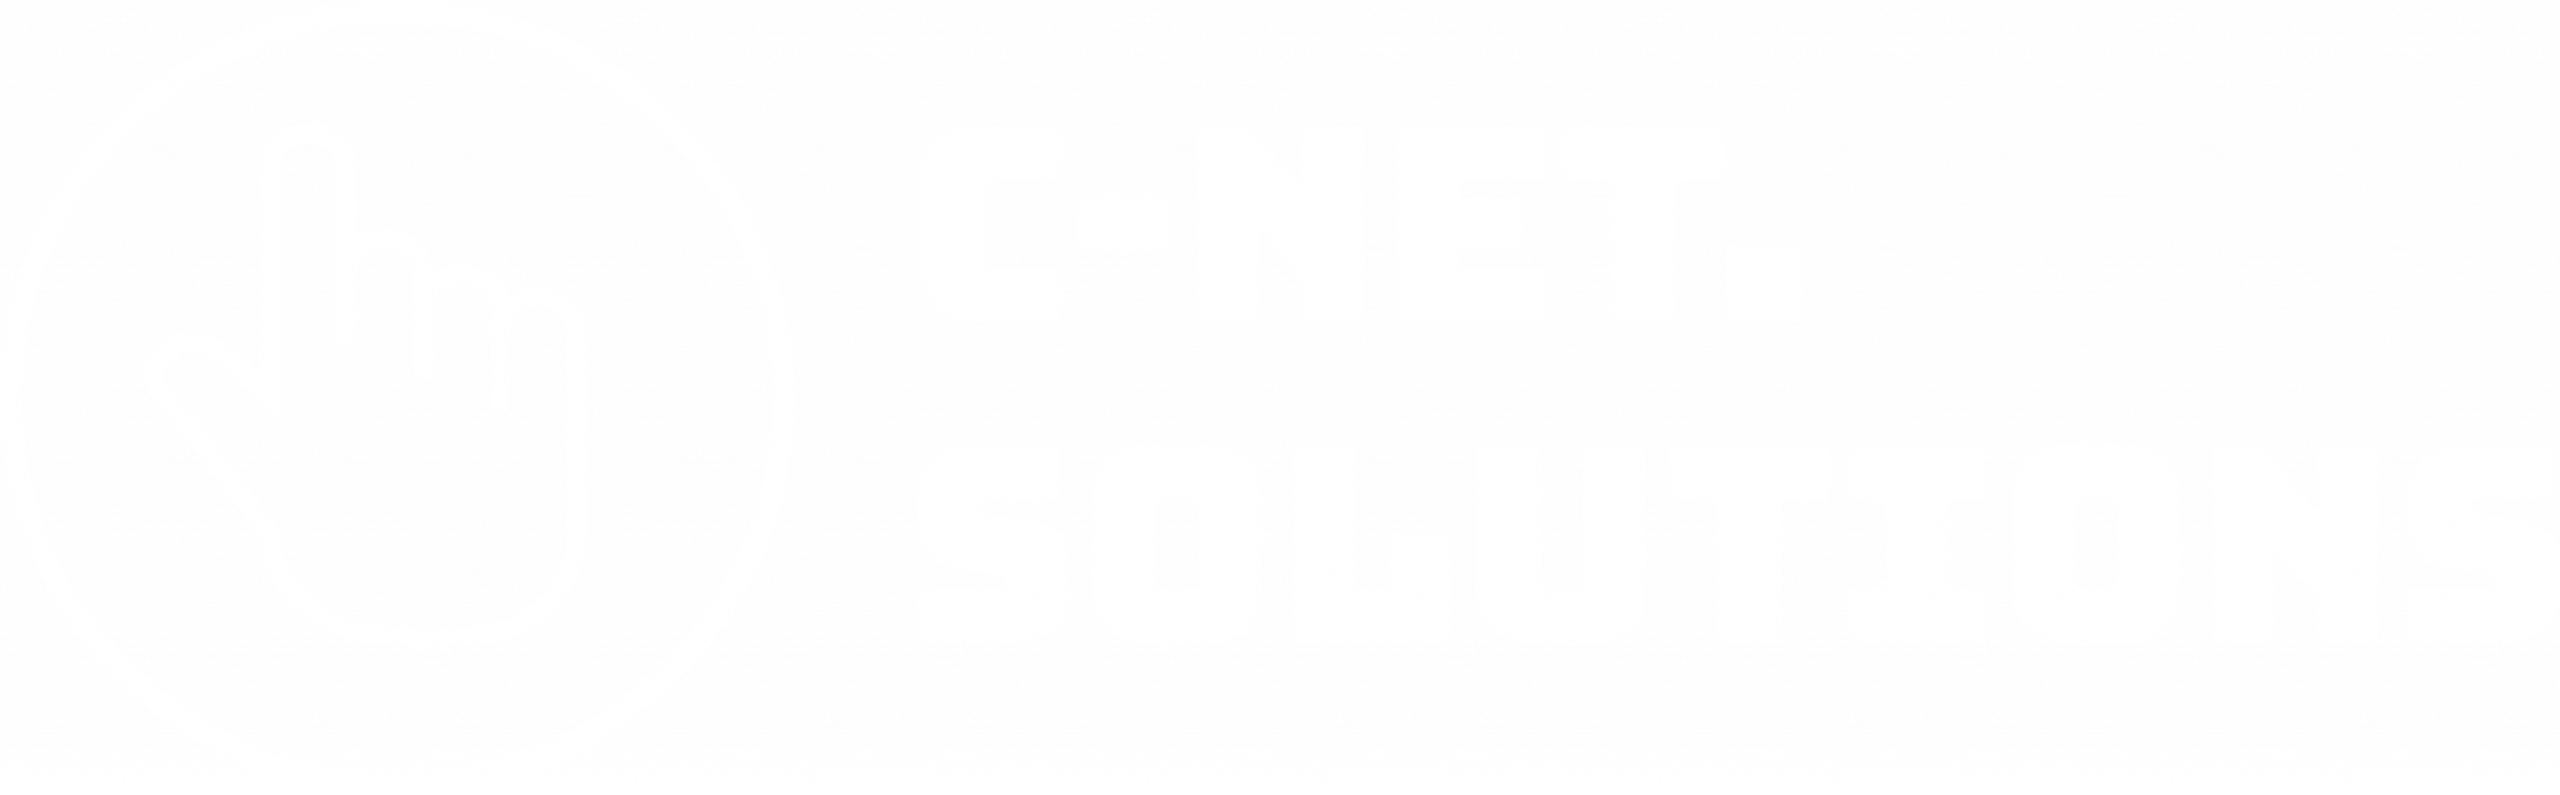 C-NET.solutions Olomouc